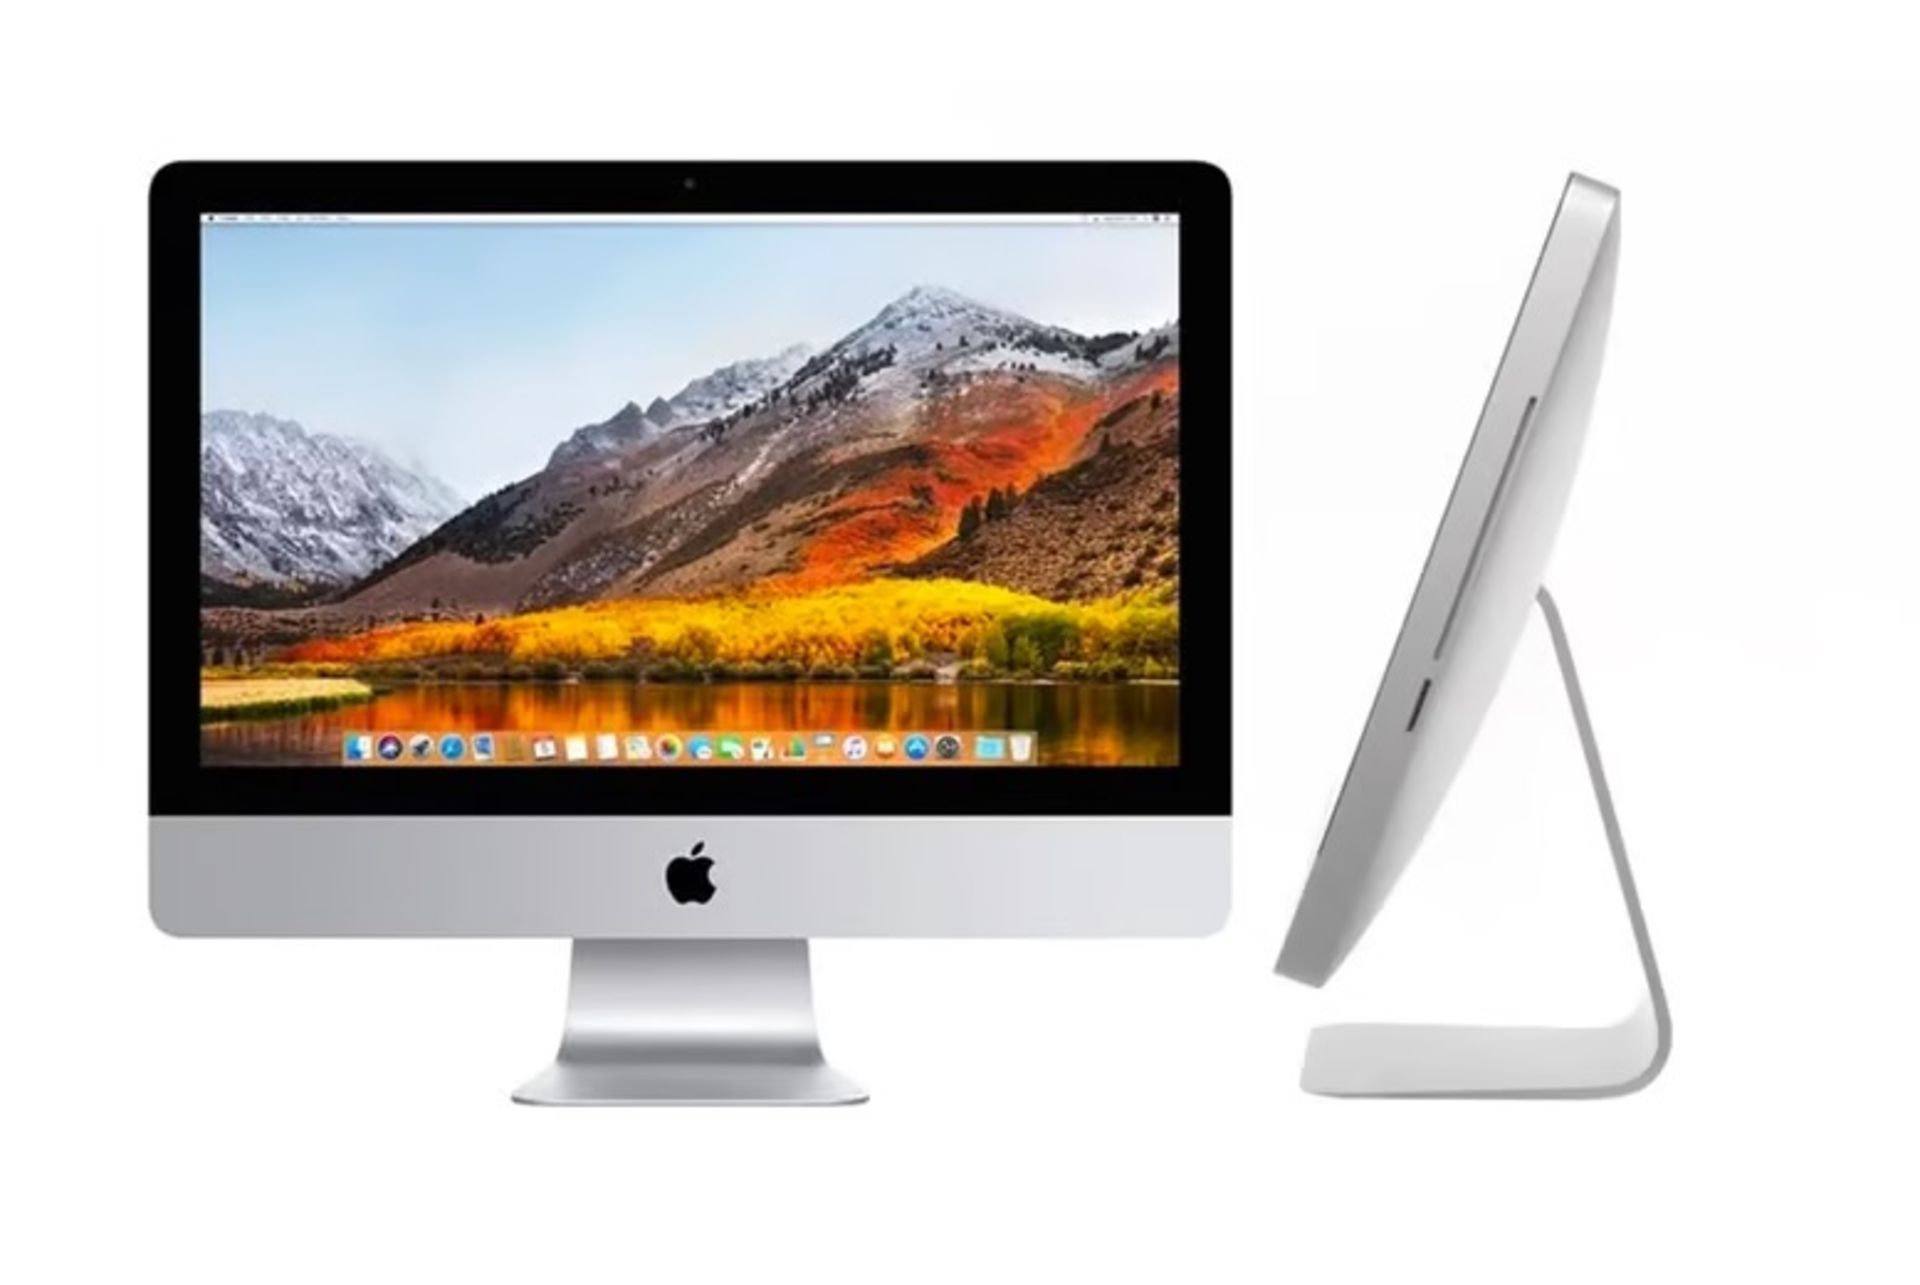 Apple iMac 21.5” OS X High Sierra Intel Core i5 Quad Core 8GB Memory 500GB HD & 240GB SSD Office